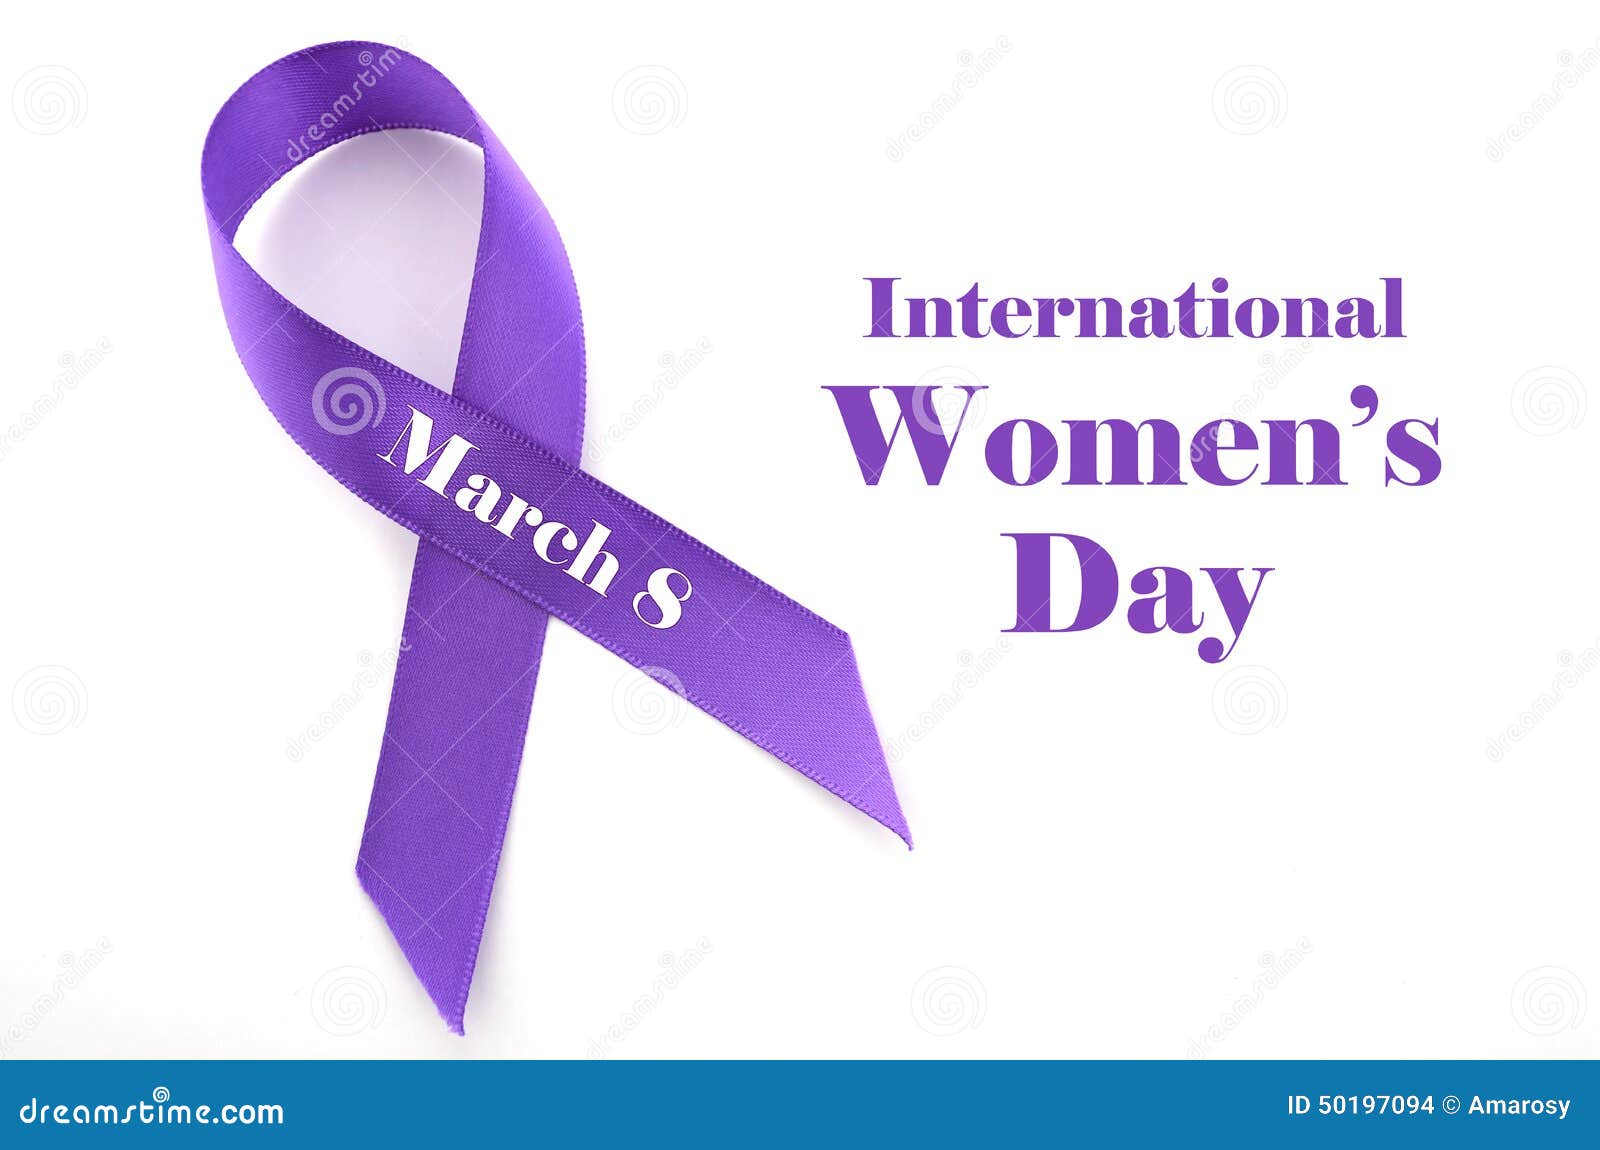 international womens day, march 8, purple ribbon